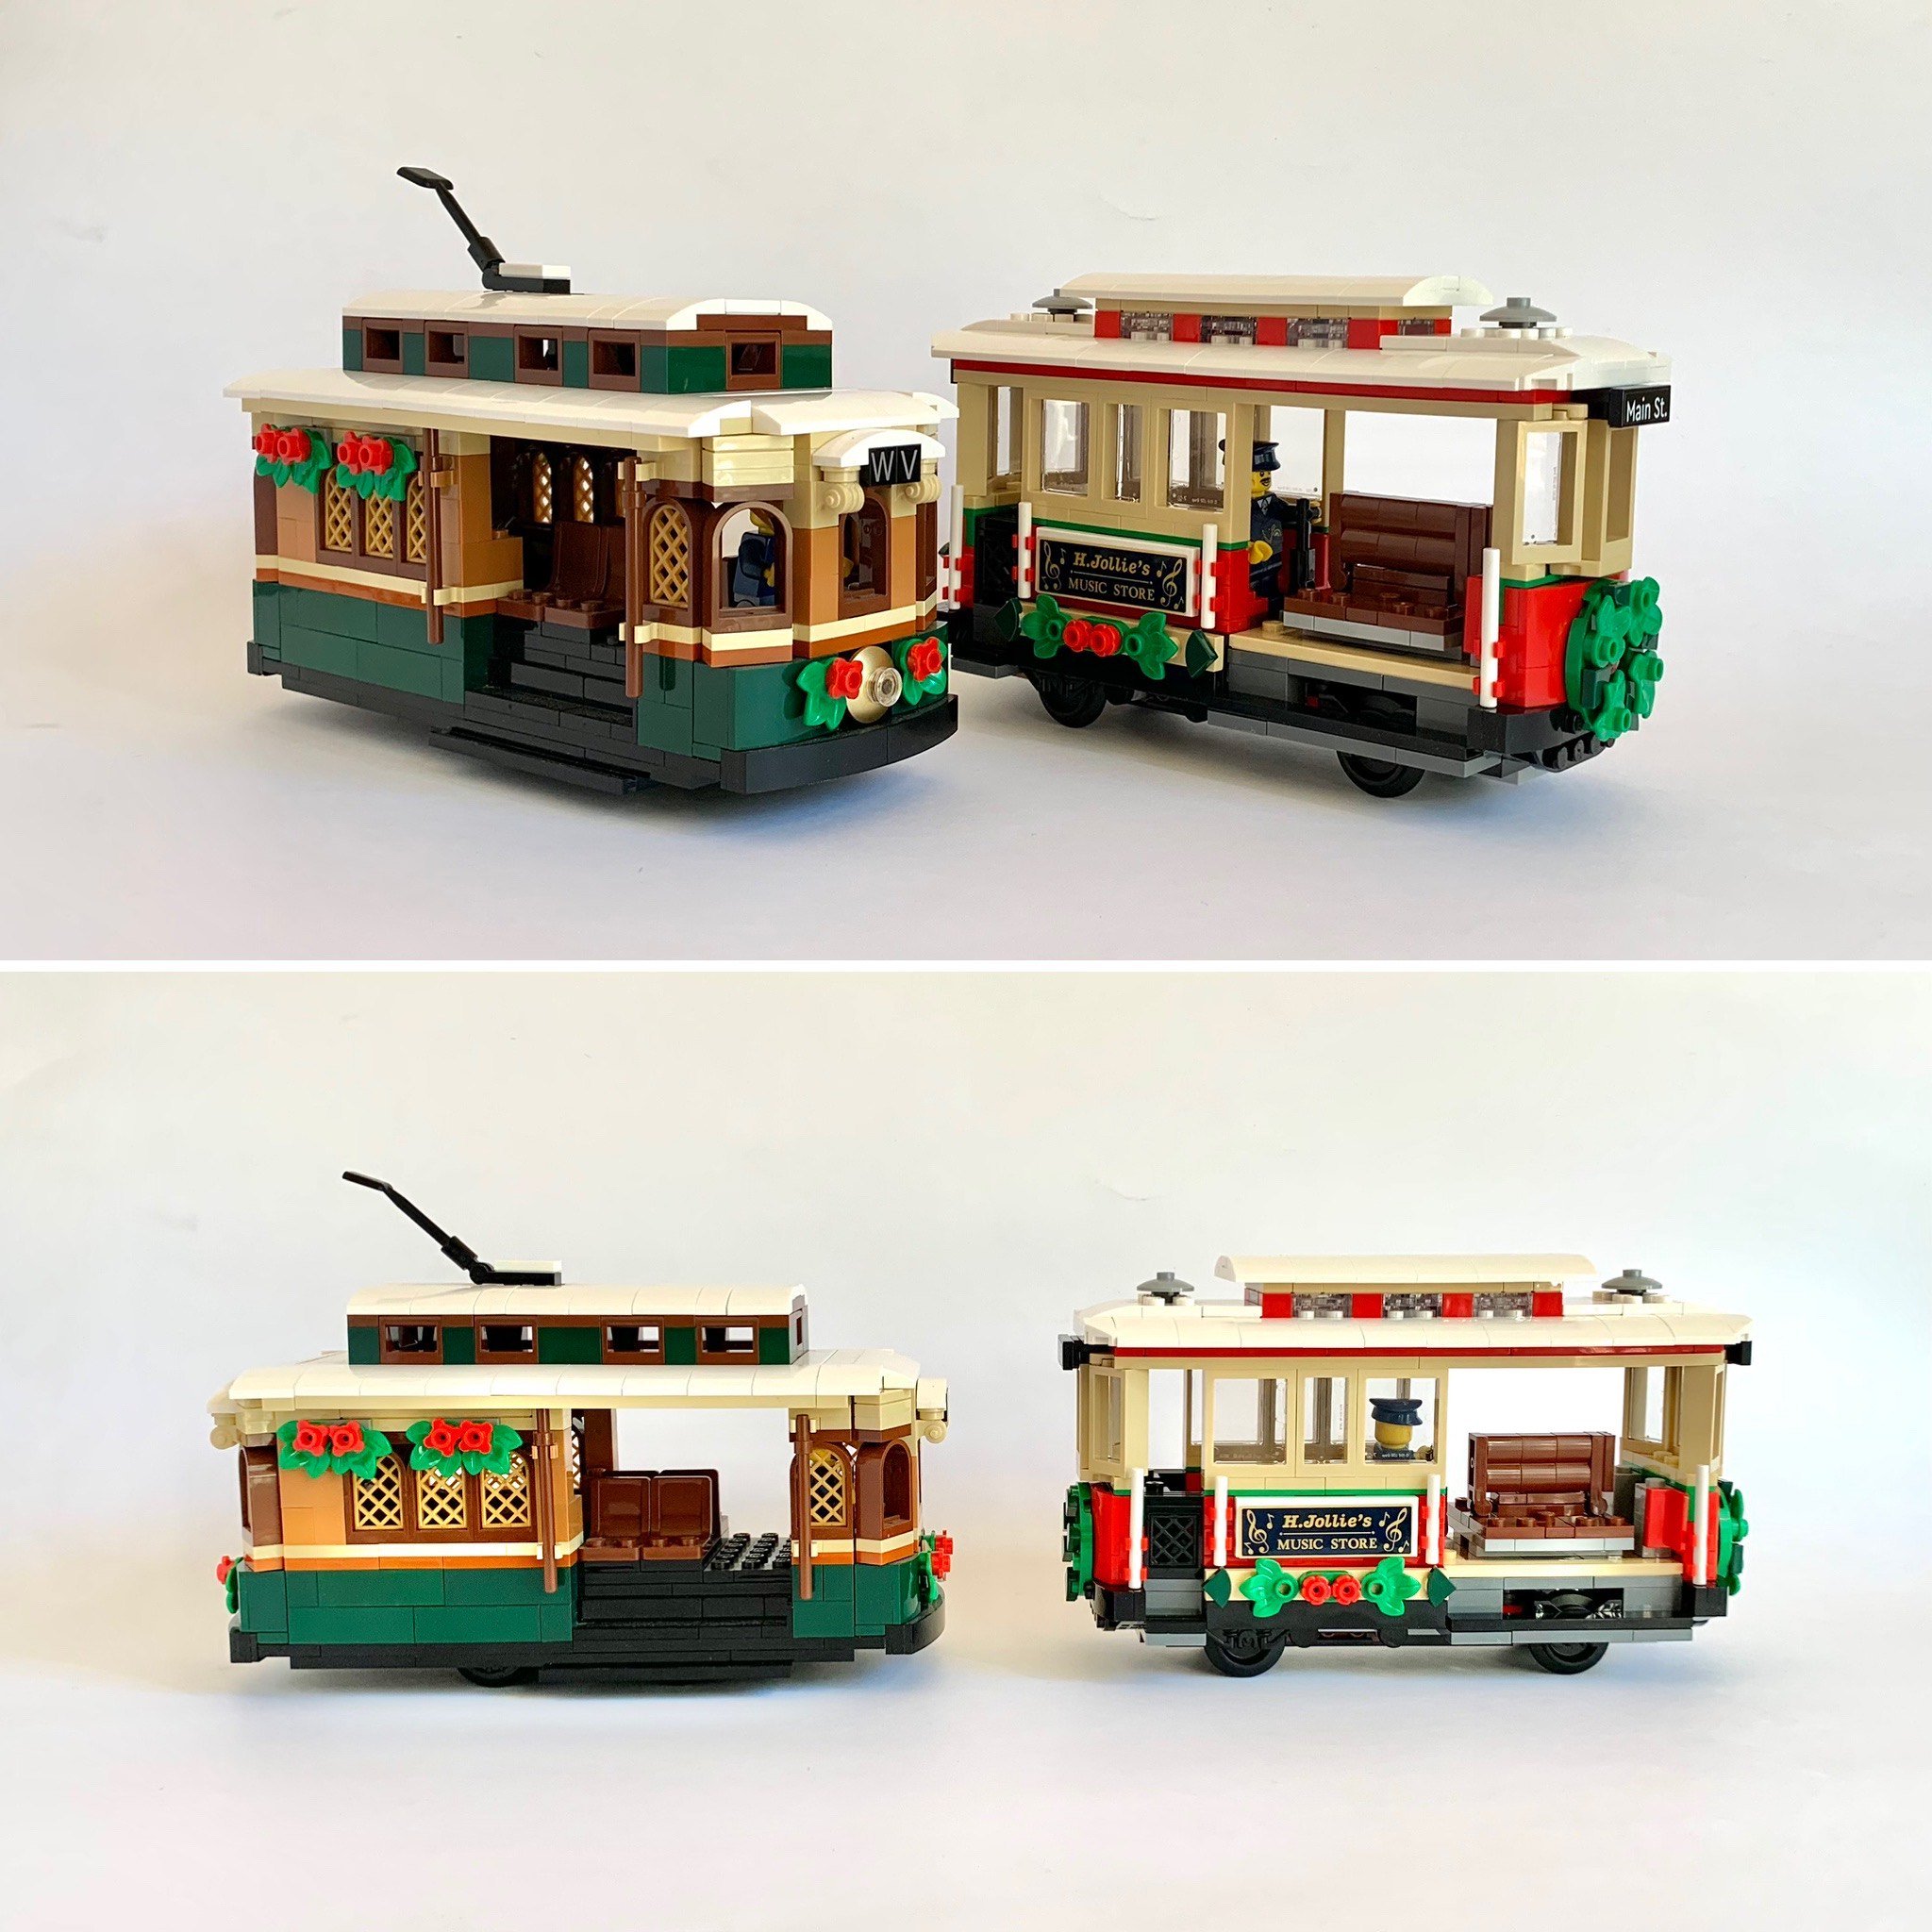 Customizing the LEGO Holiday Main Street Tram - BrickNerd - All LEGO and the LEGO fan community